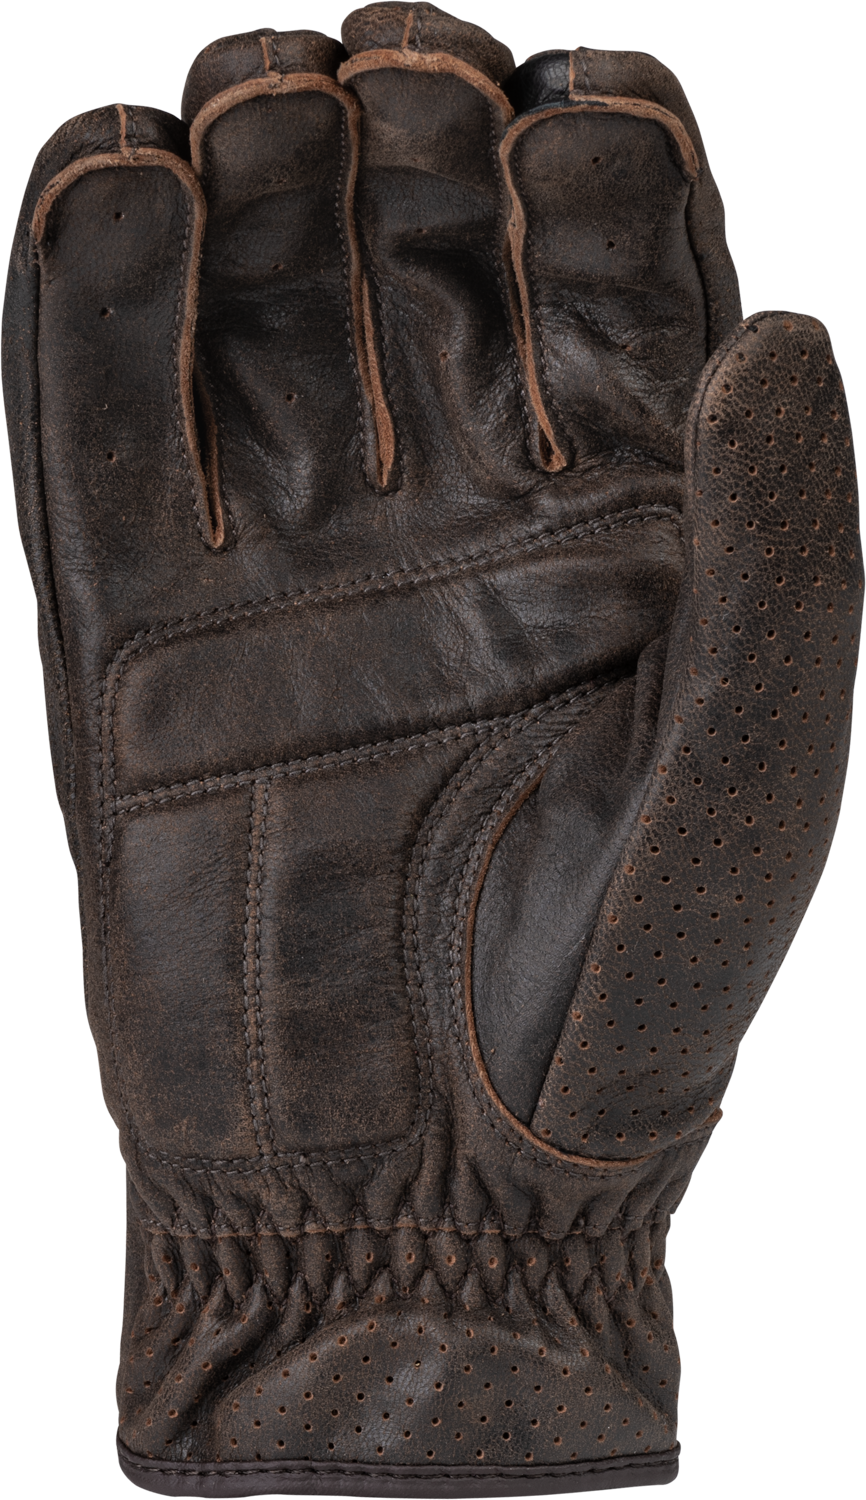 Jab Perforated Gloves Brown Lg